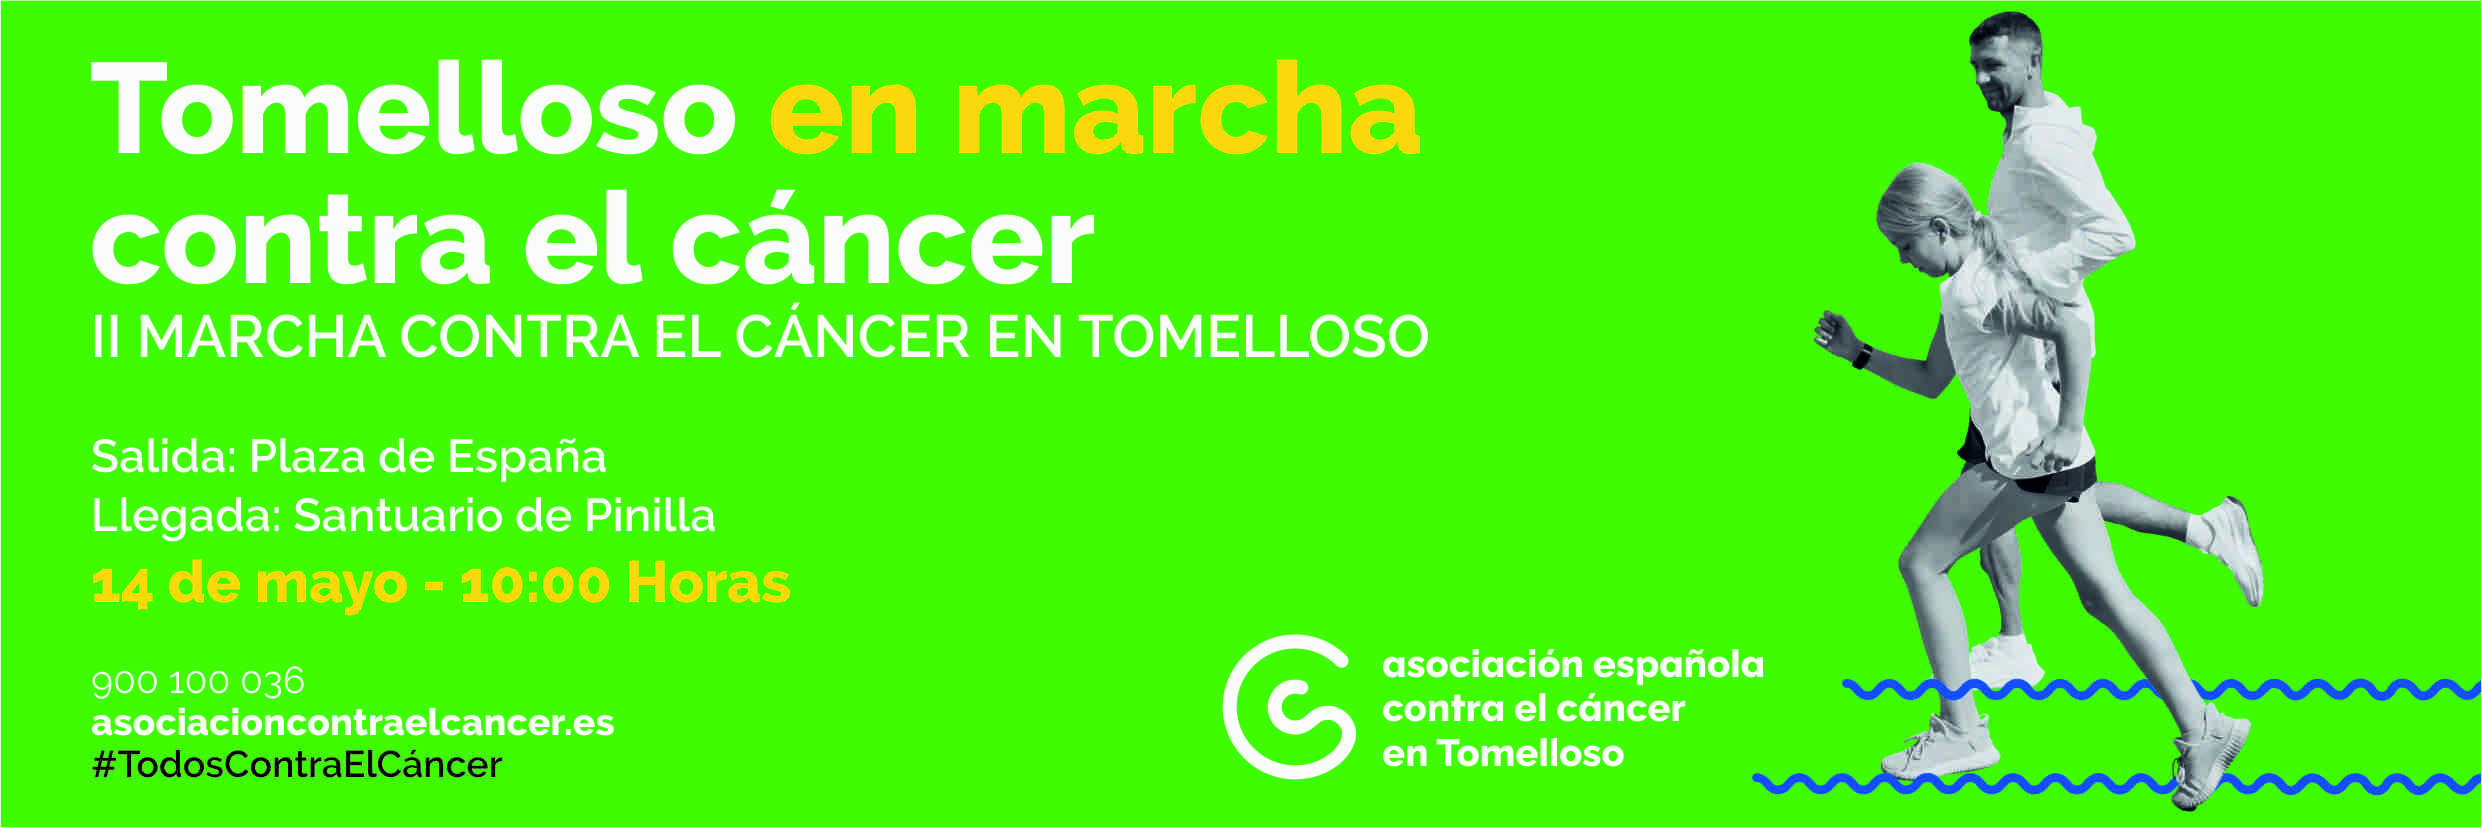 MARCHA CONTRA EL CANCER TOMELLOSO